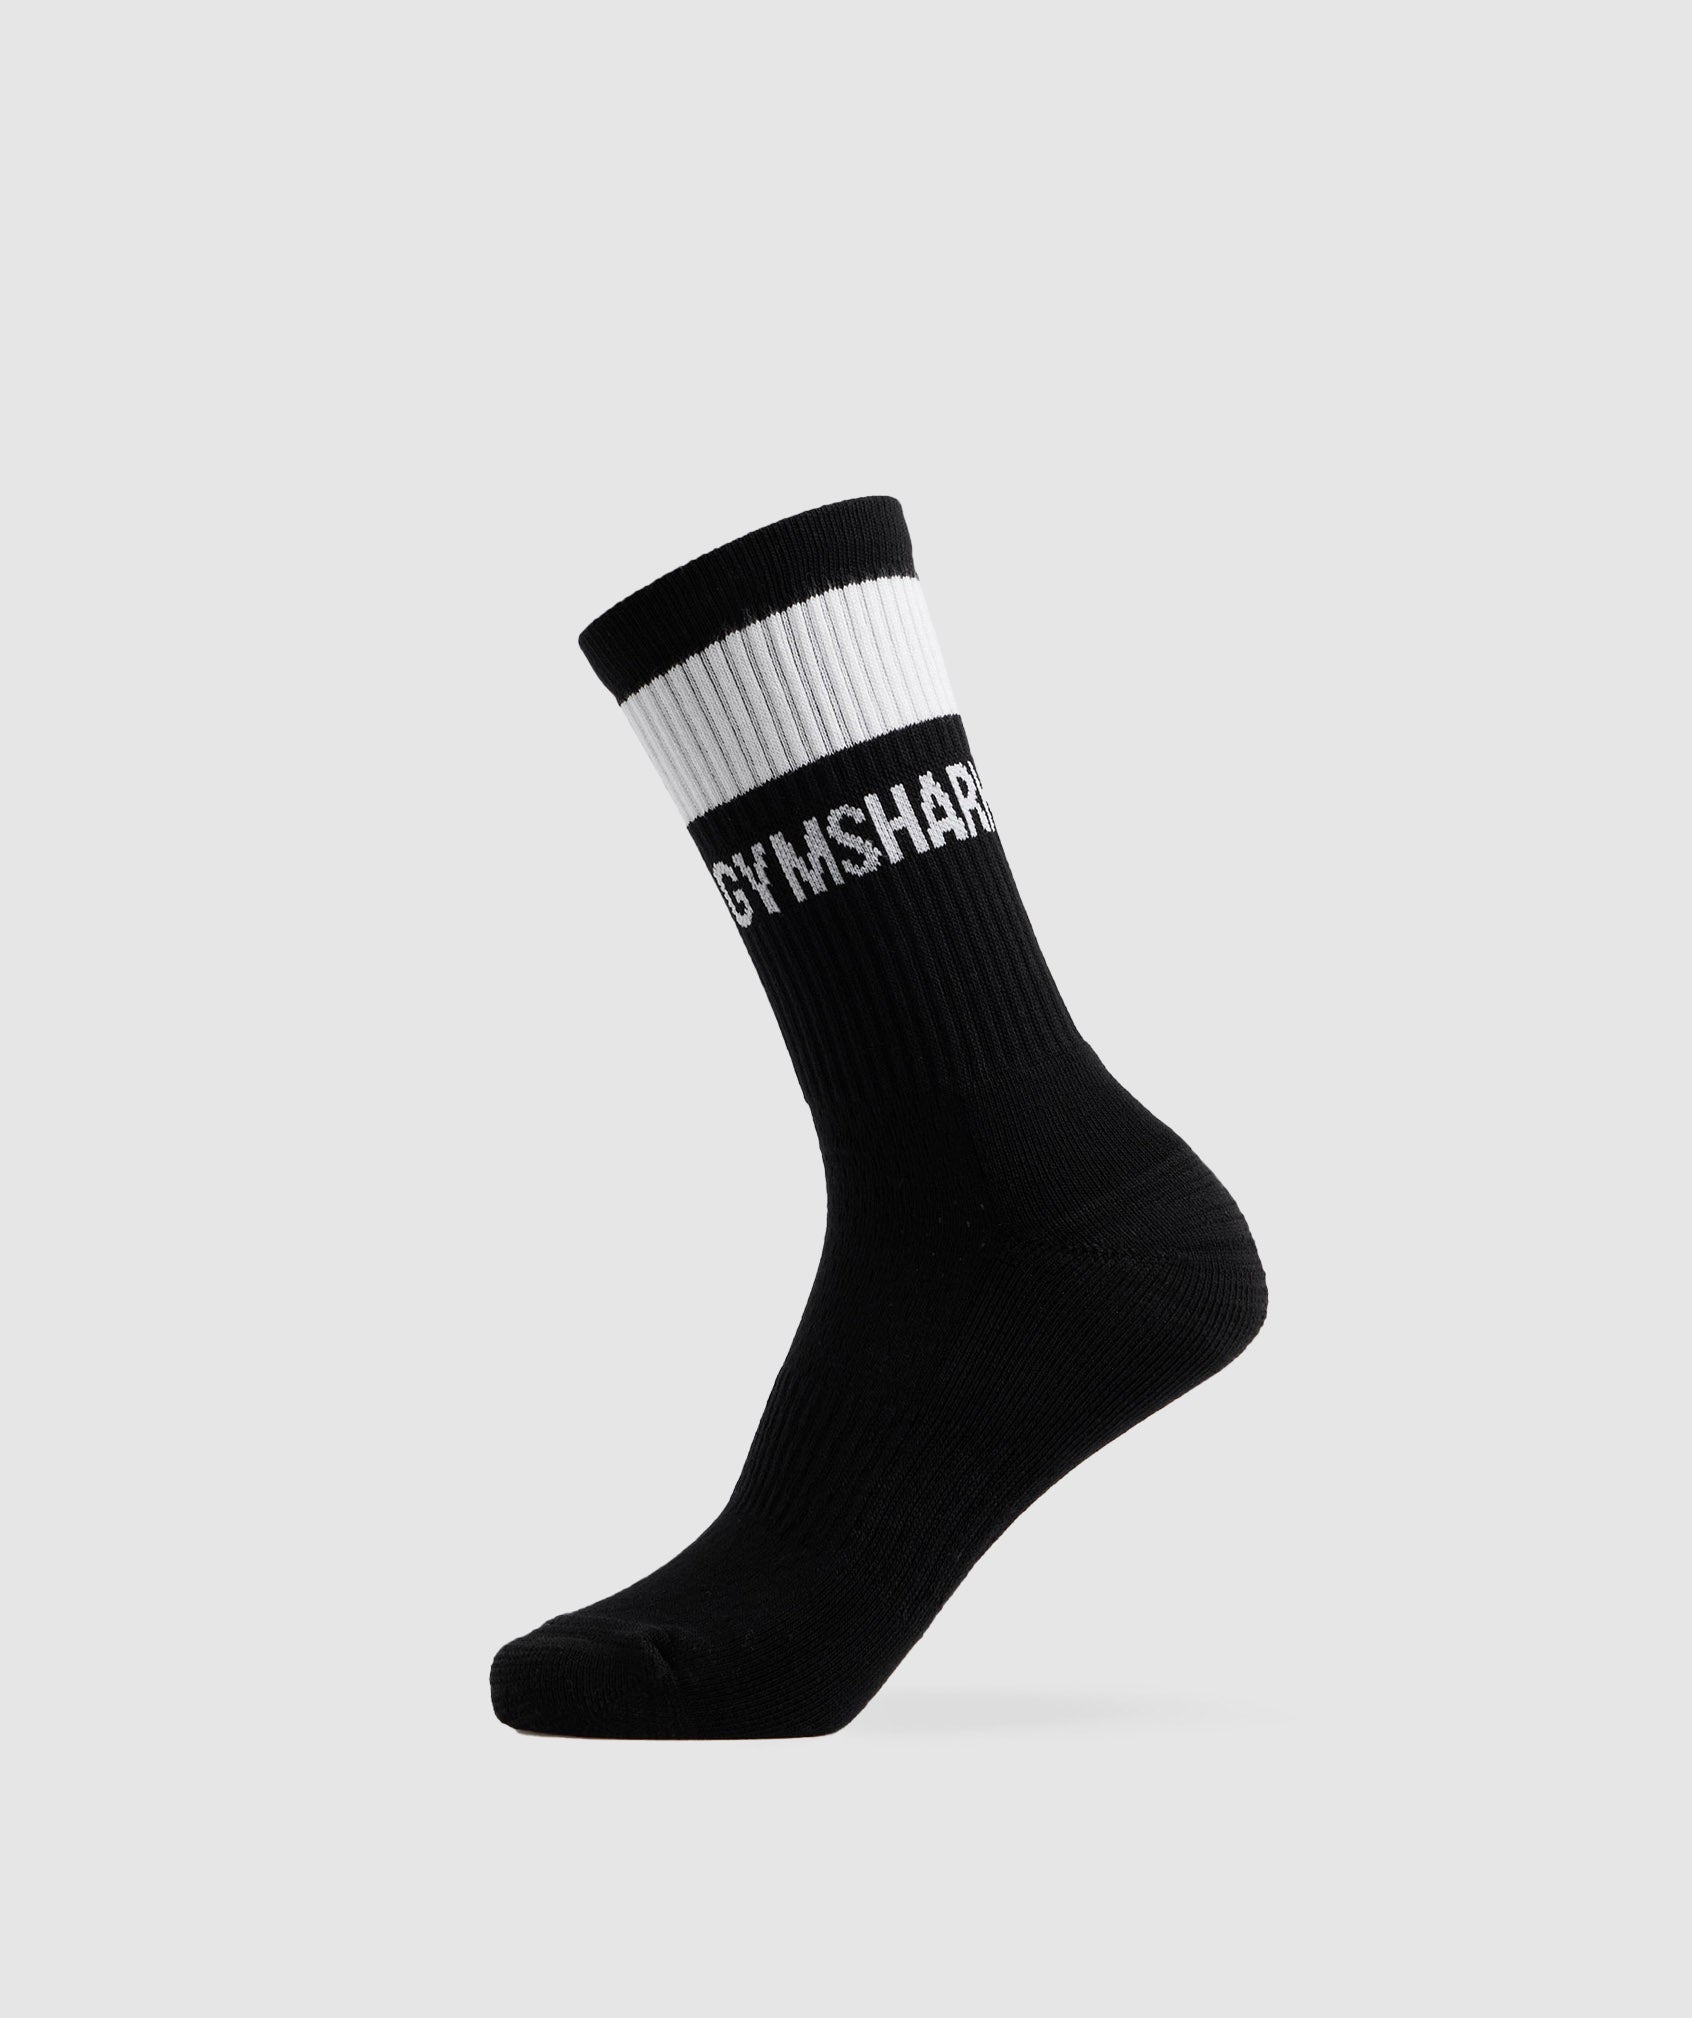 Original Brand new Adidas gymshark Muji socks